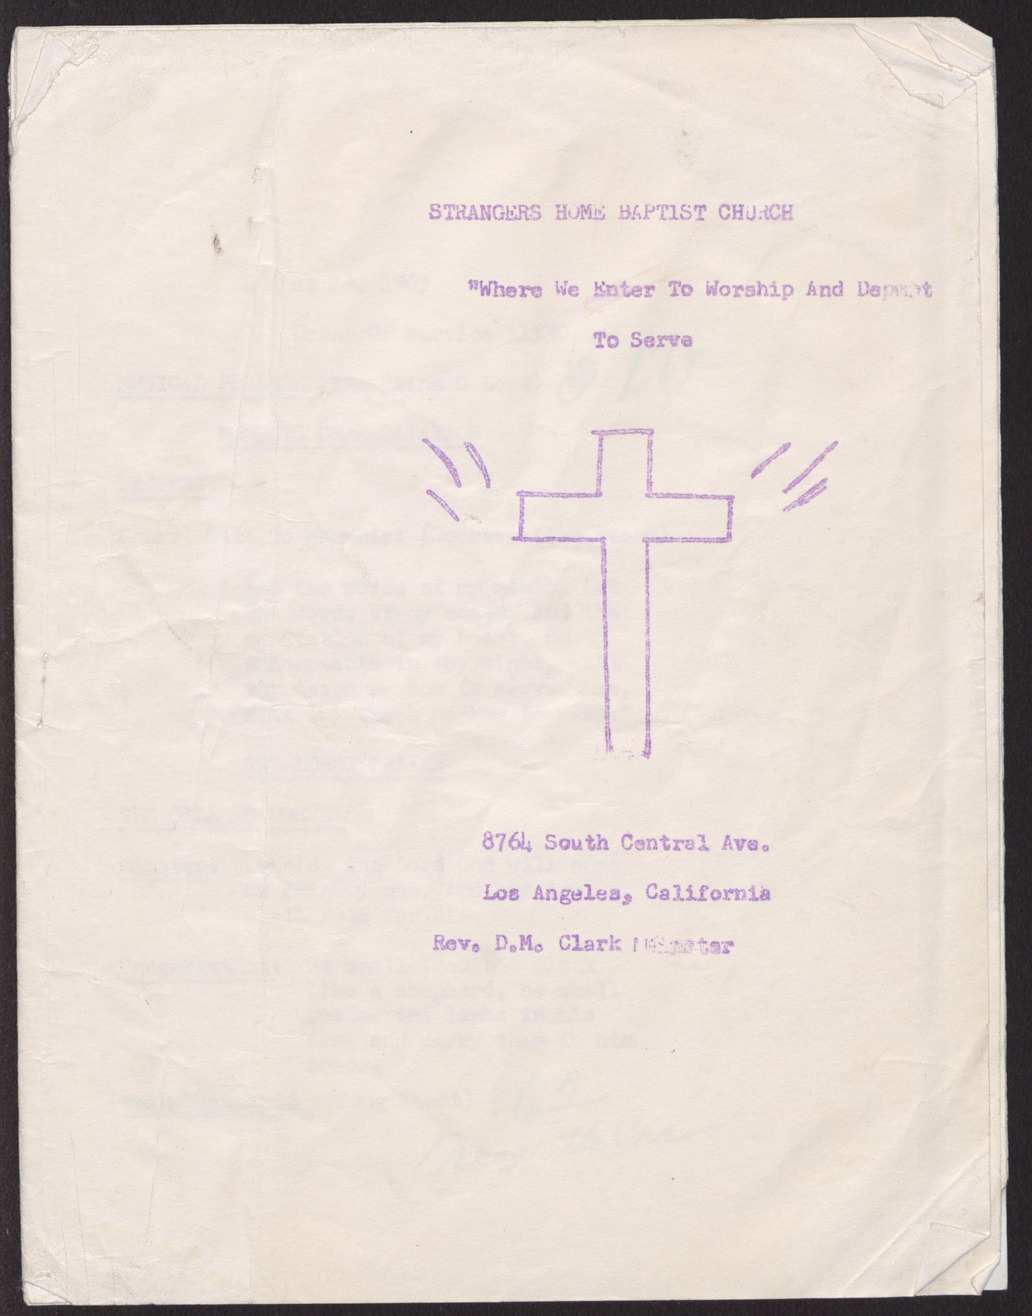 Church service program, [no month] 19, 1963 (5 images)